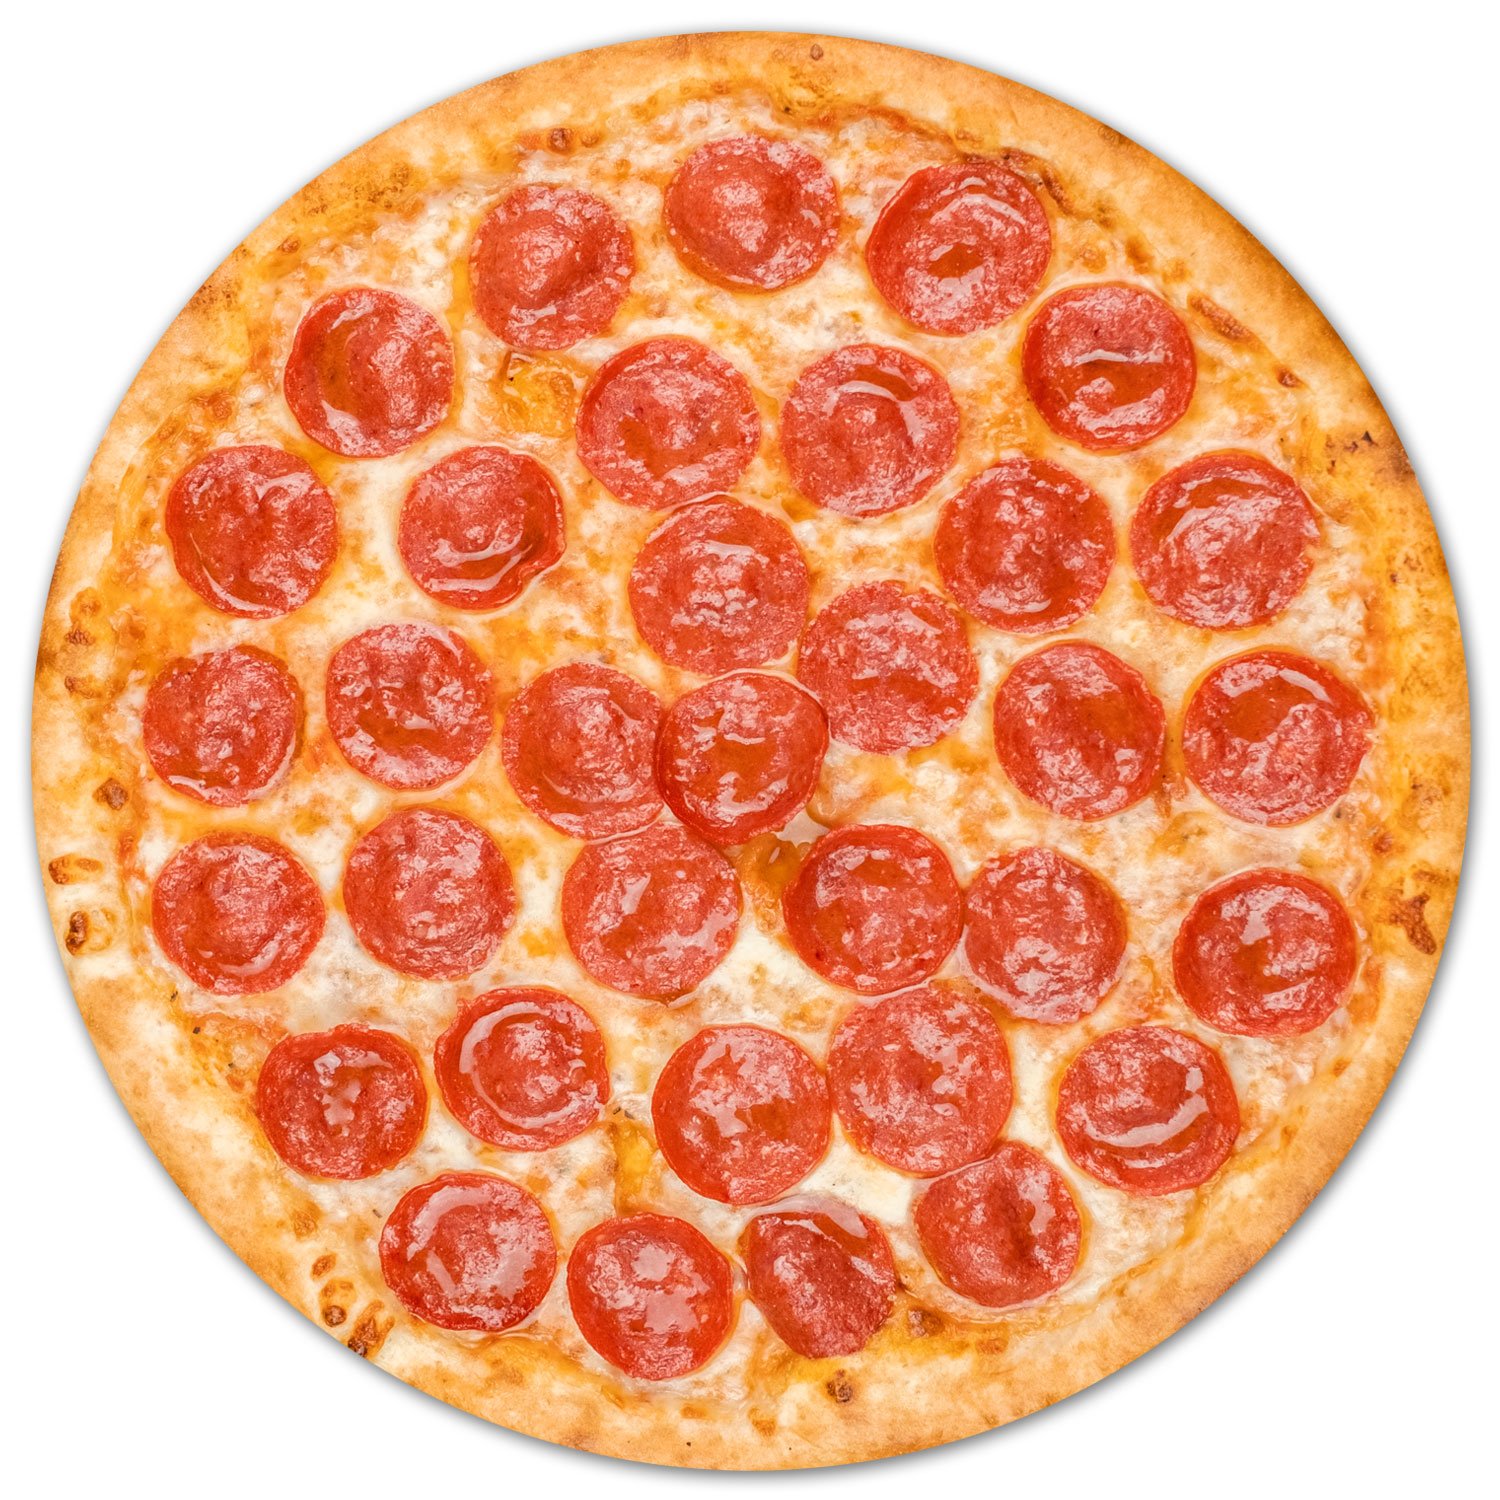 пицца пепперони фото на белом фоне фото 9